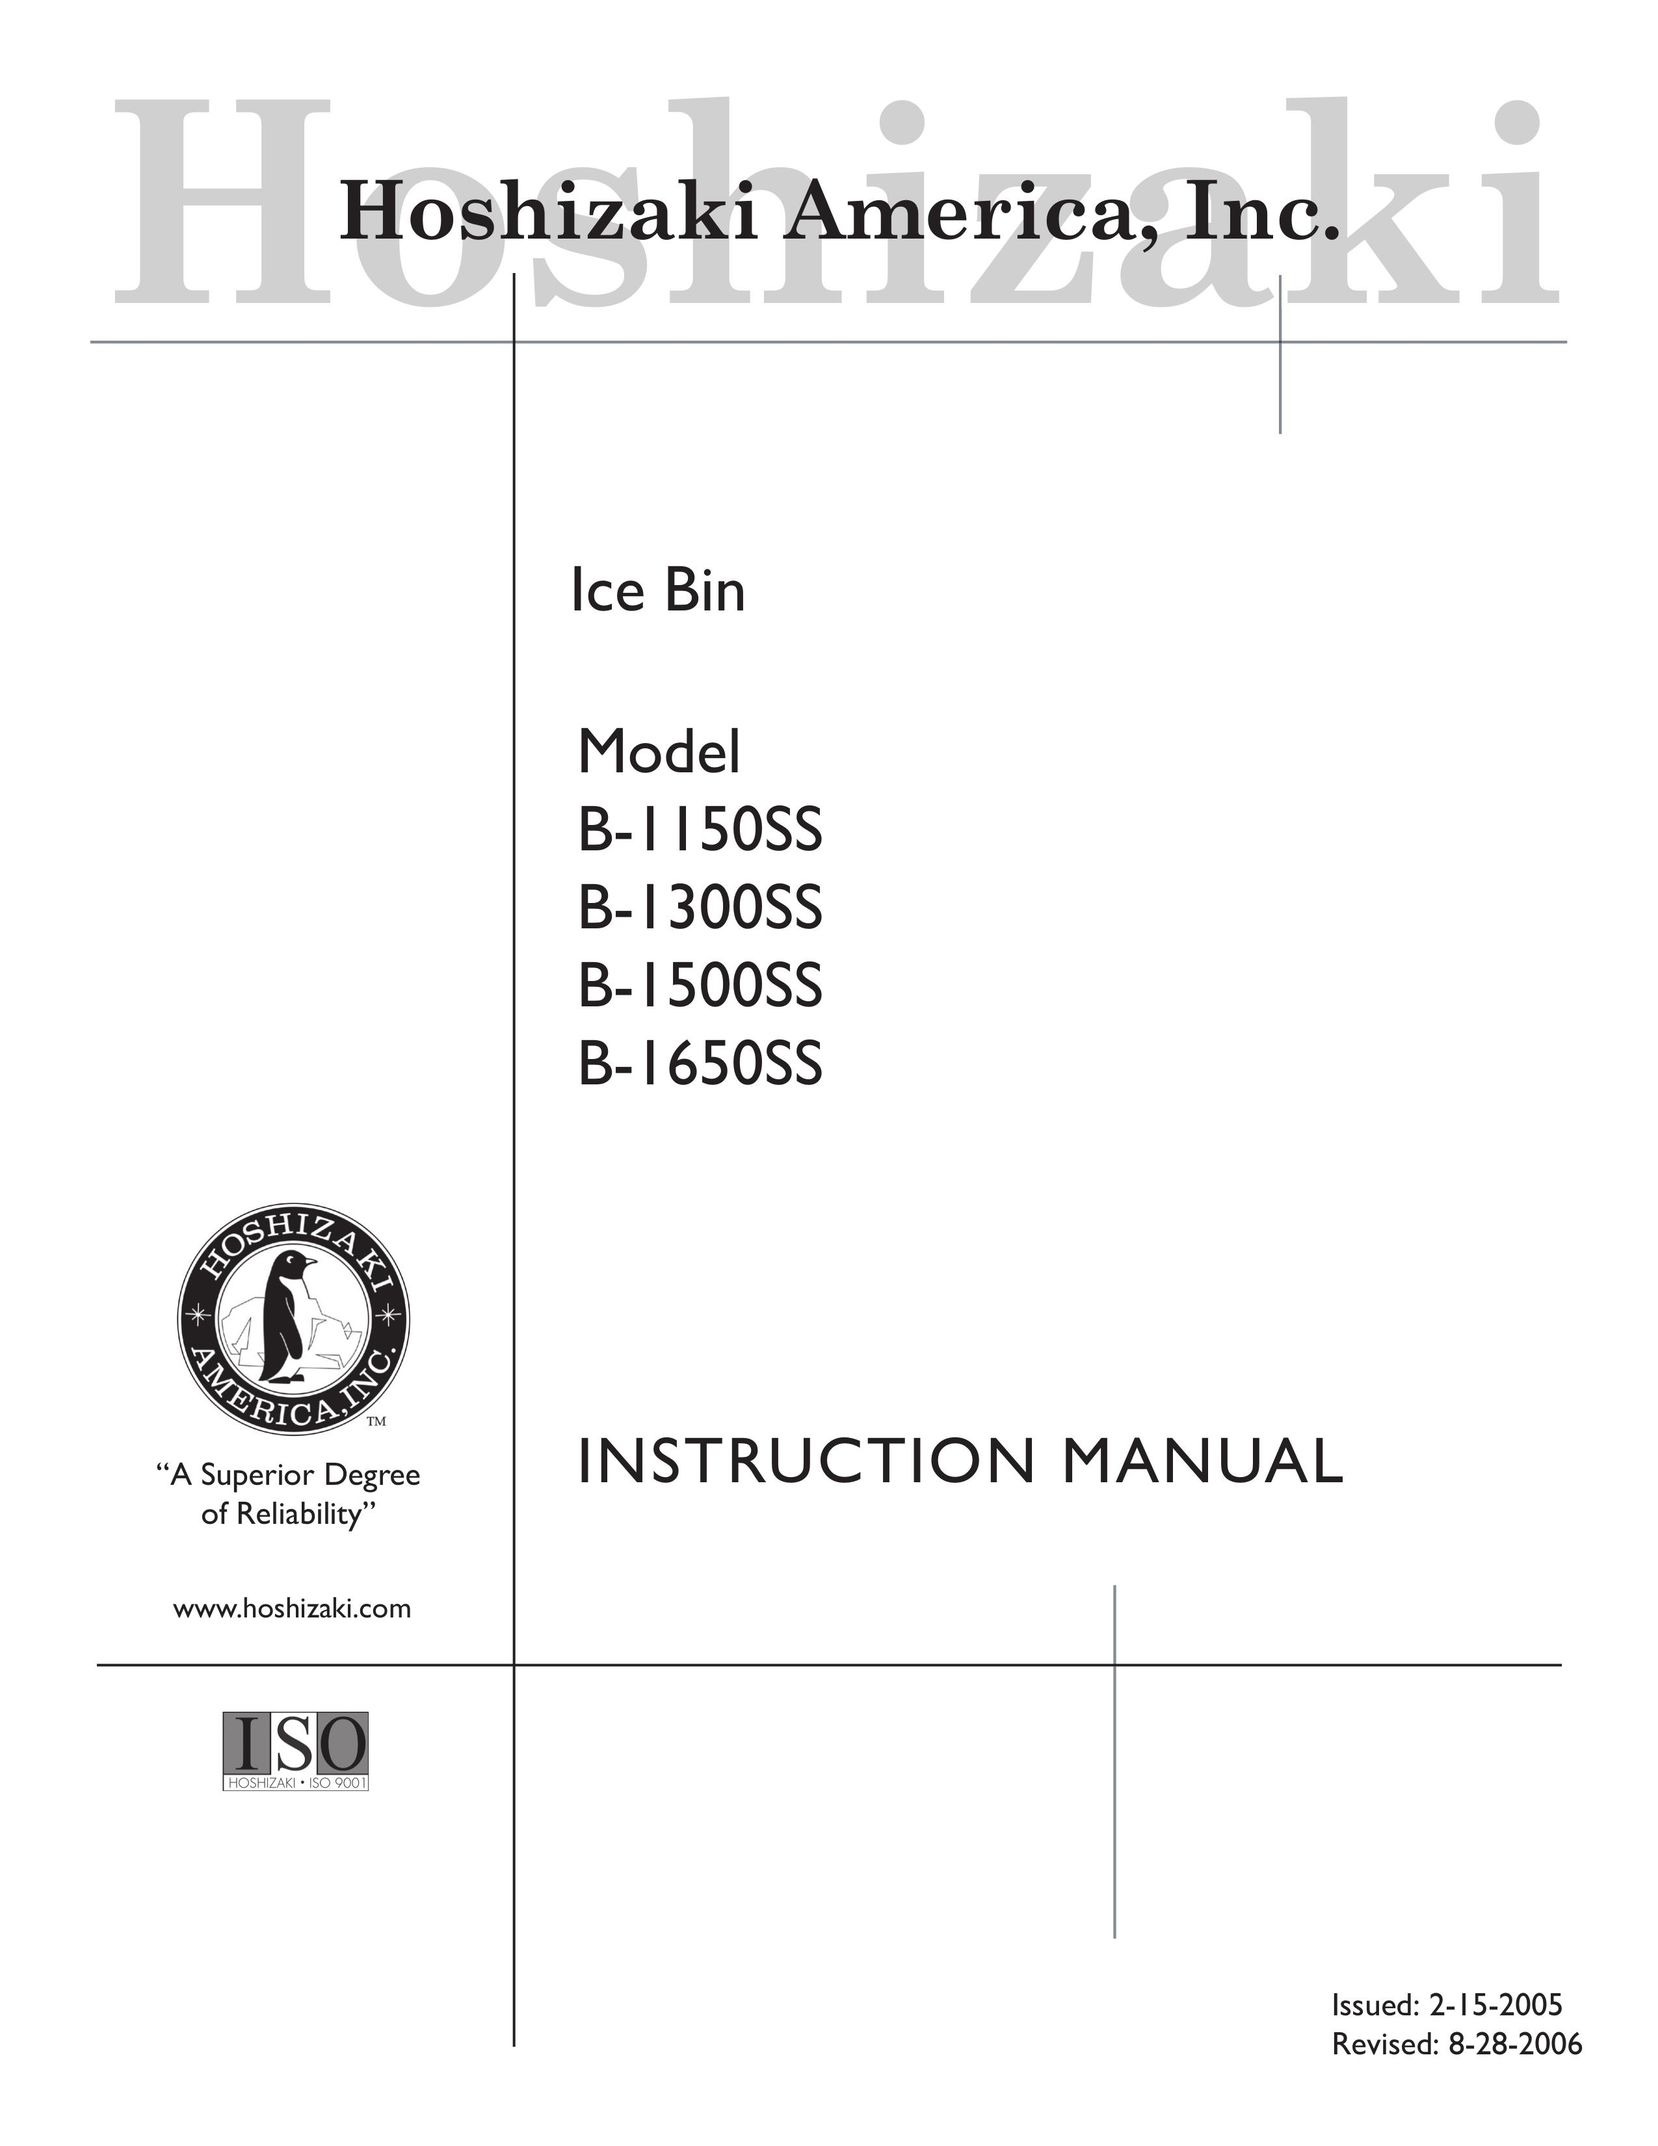 Hoshizaki B-1300SS Ice Maker User Manual